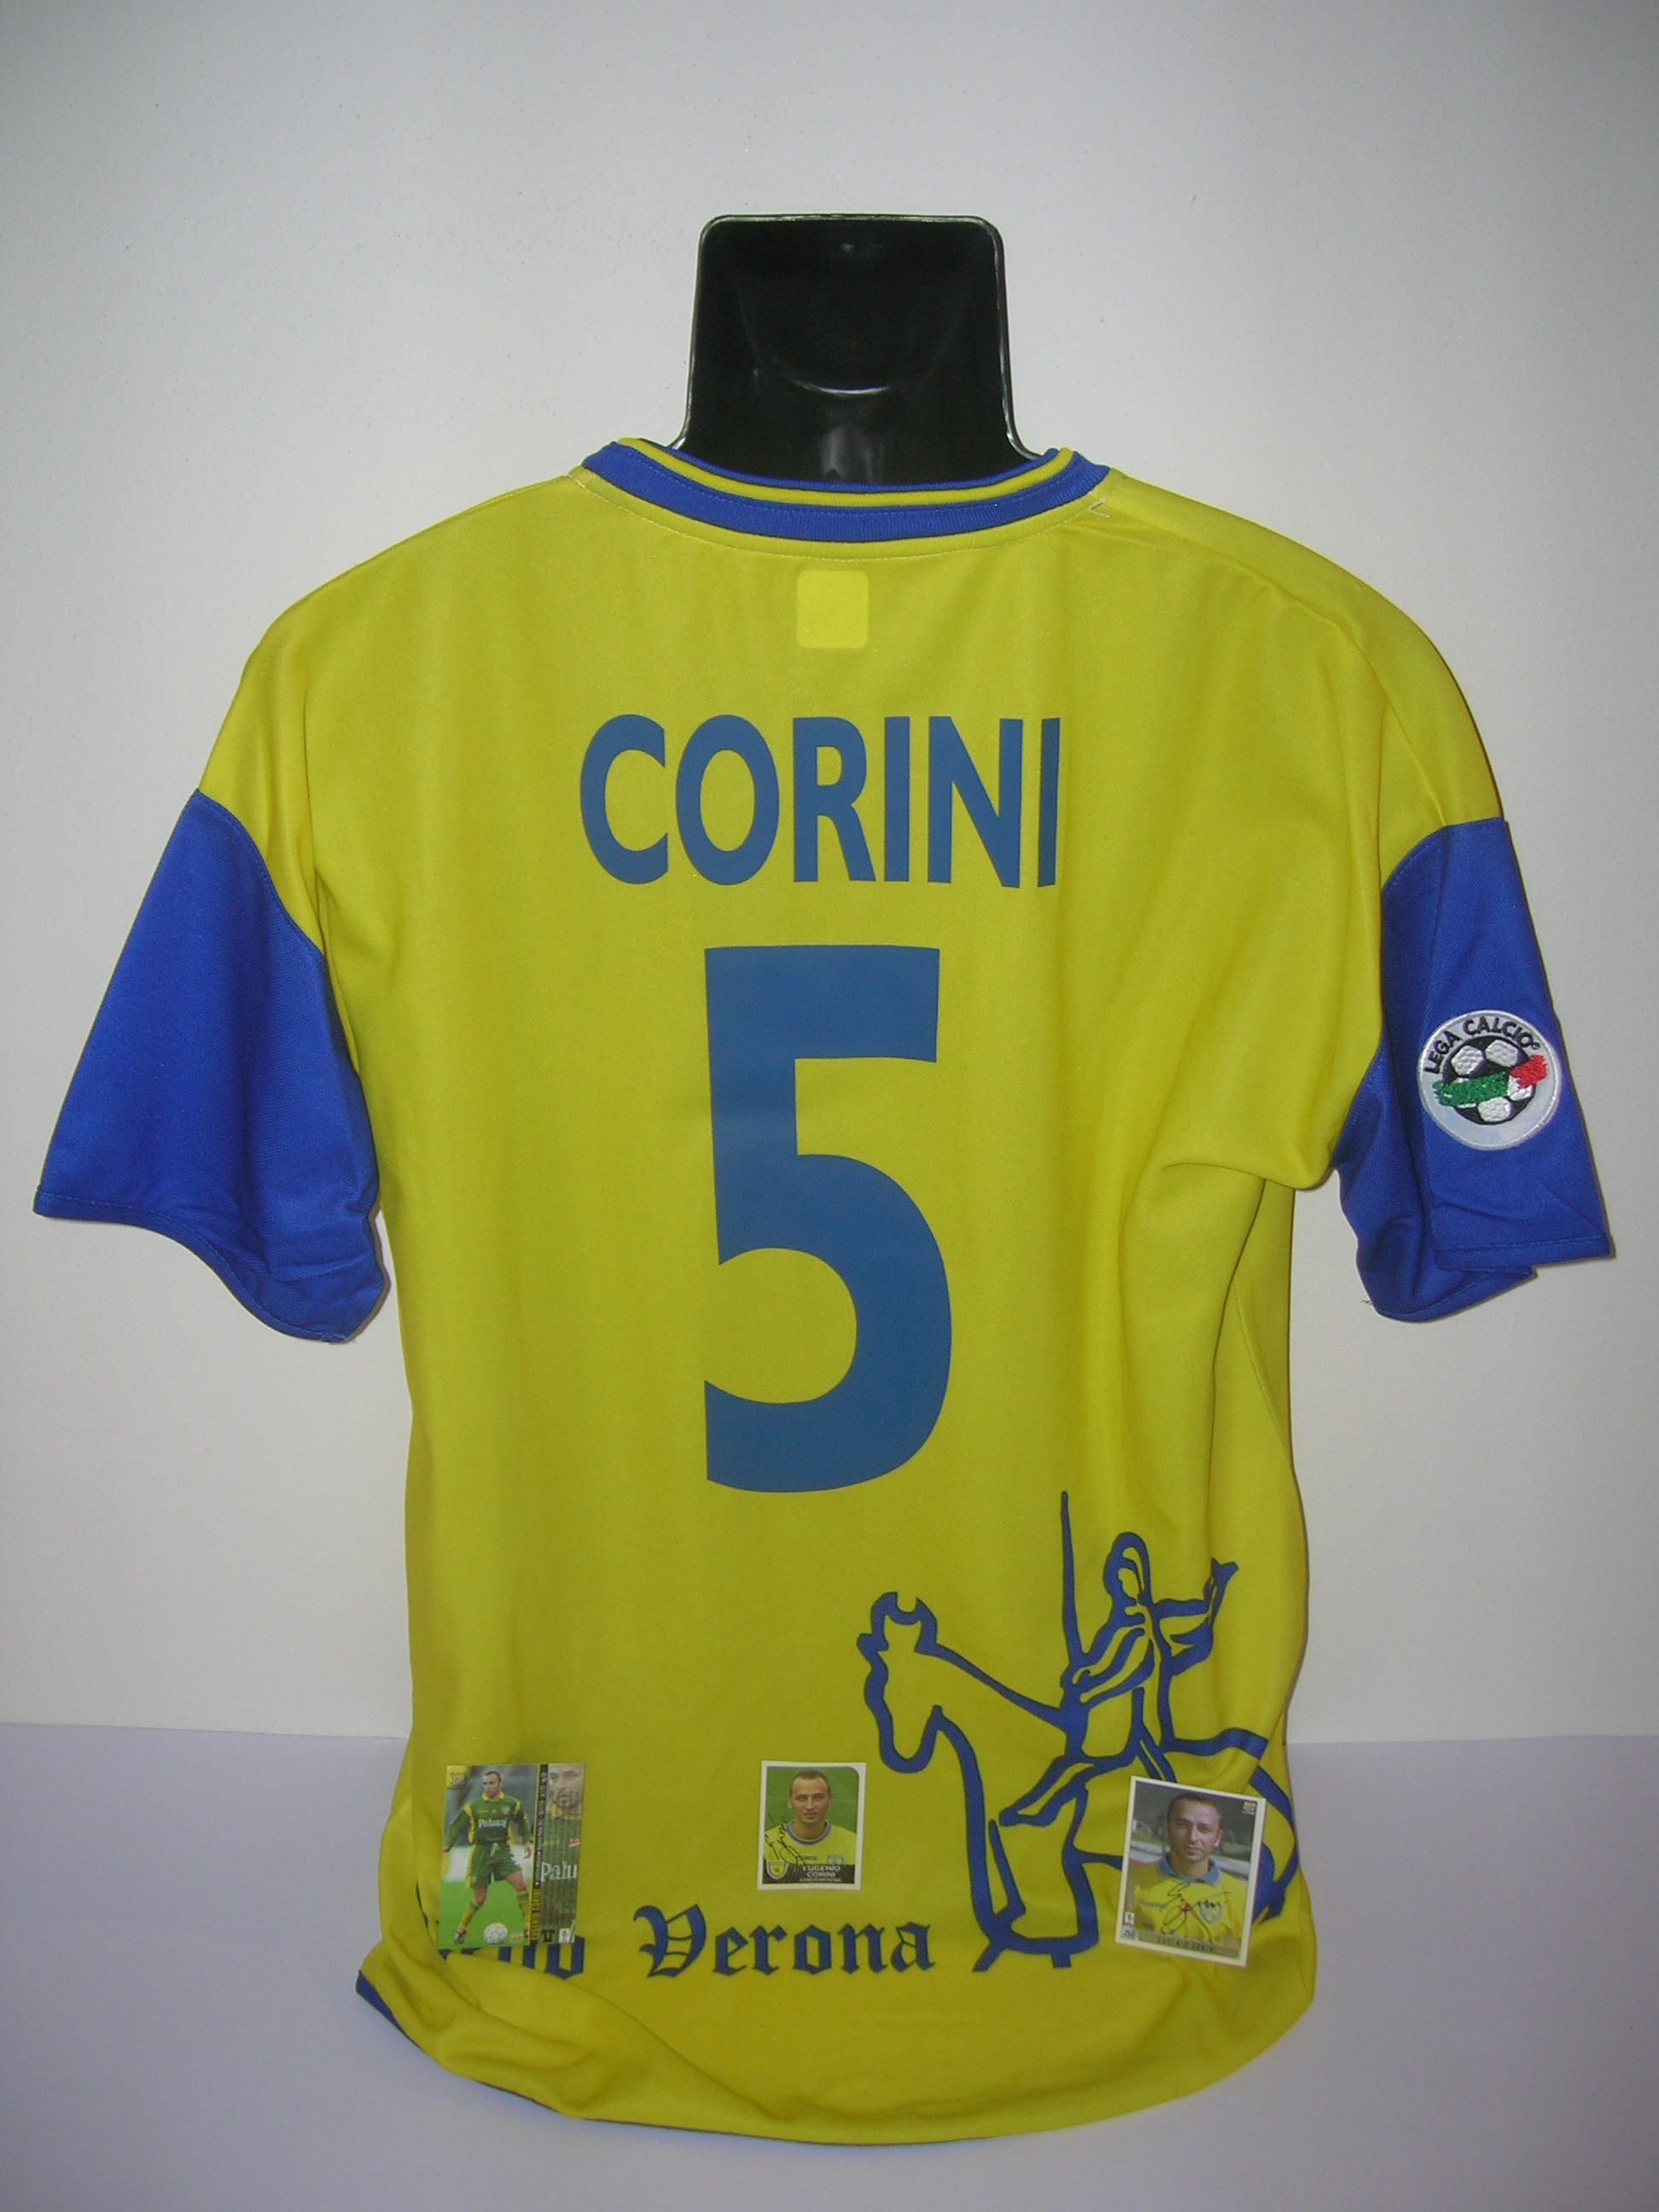 Chievo Verona  Corini  B-2